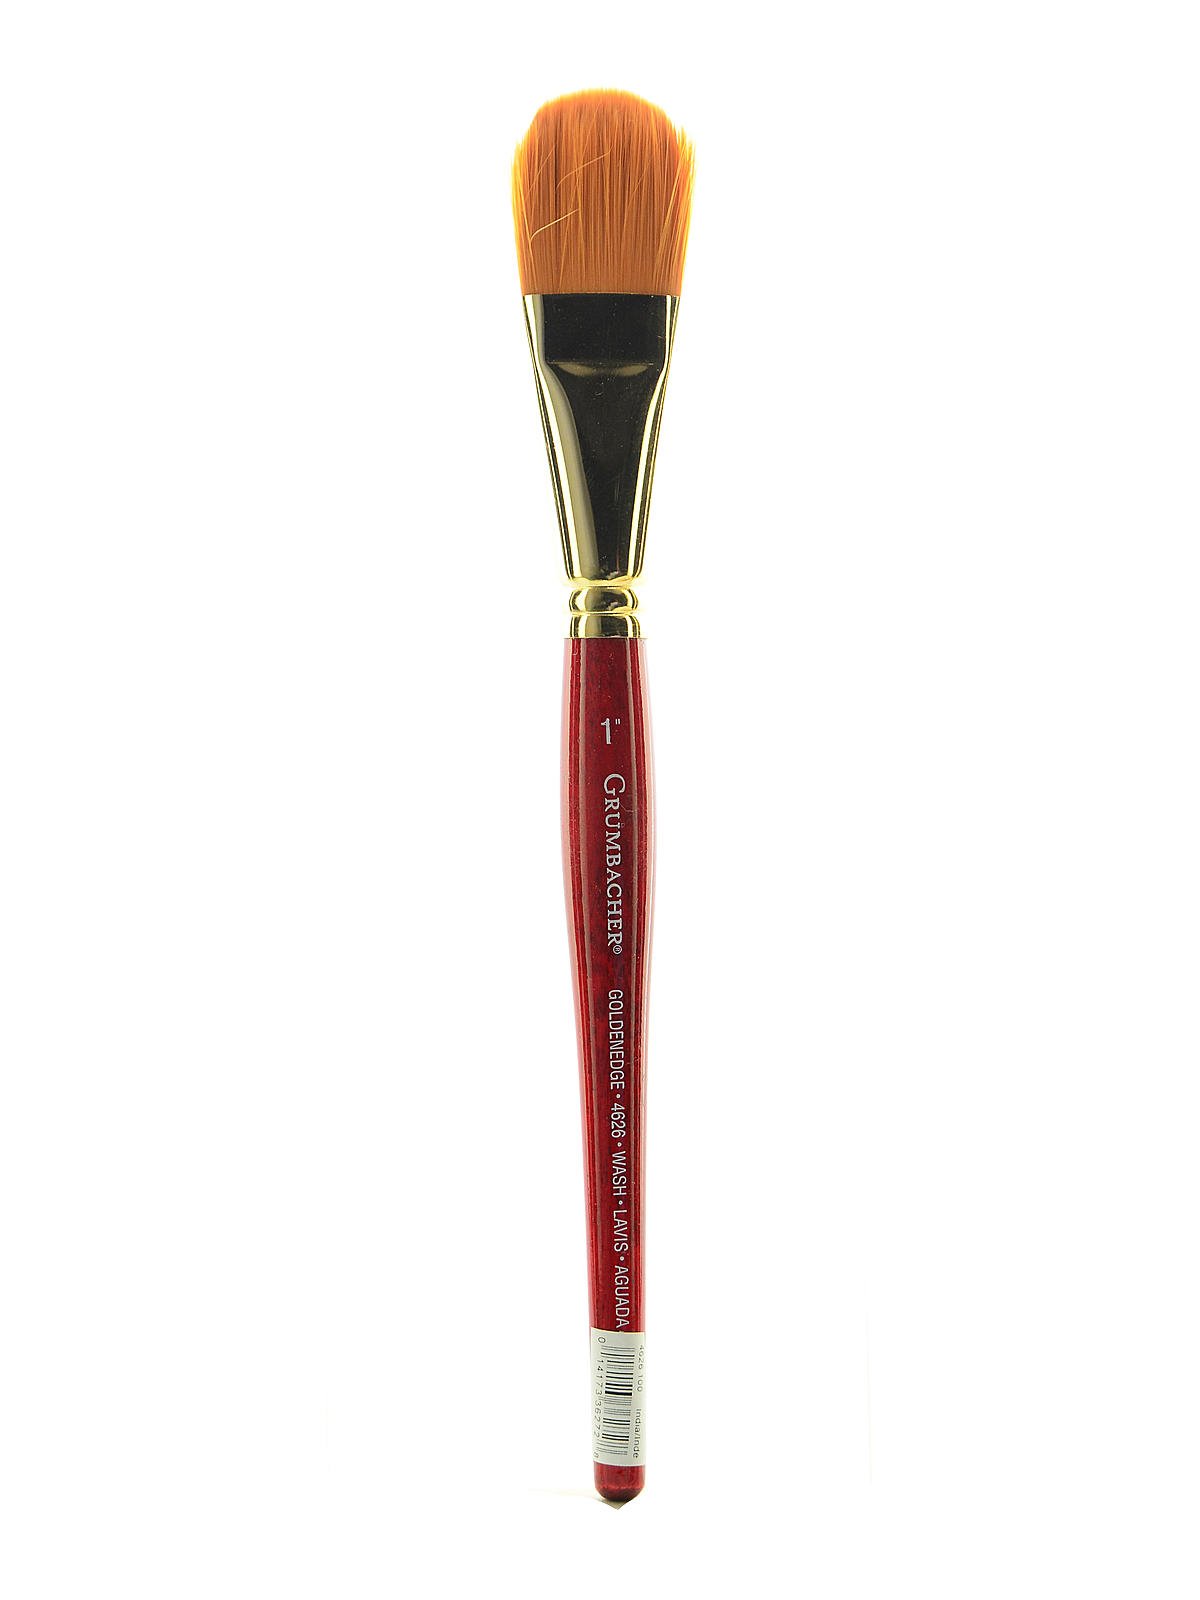 Synthetic Bristles Size 2 Chartpak Grumbacher Goldenedge Golden Toray Wash Watercolor Brush 4624.200 